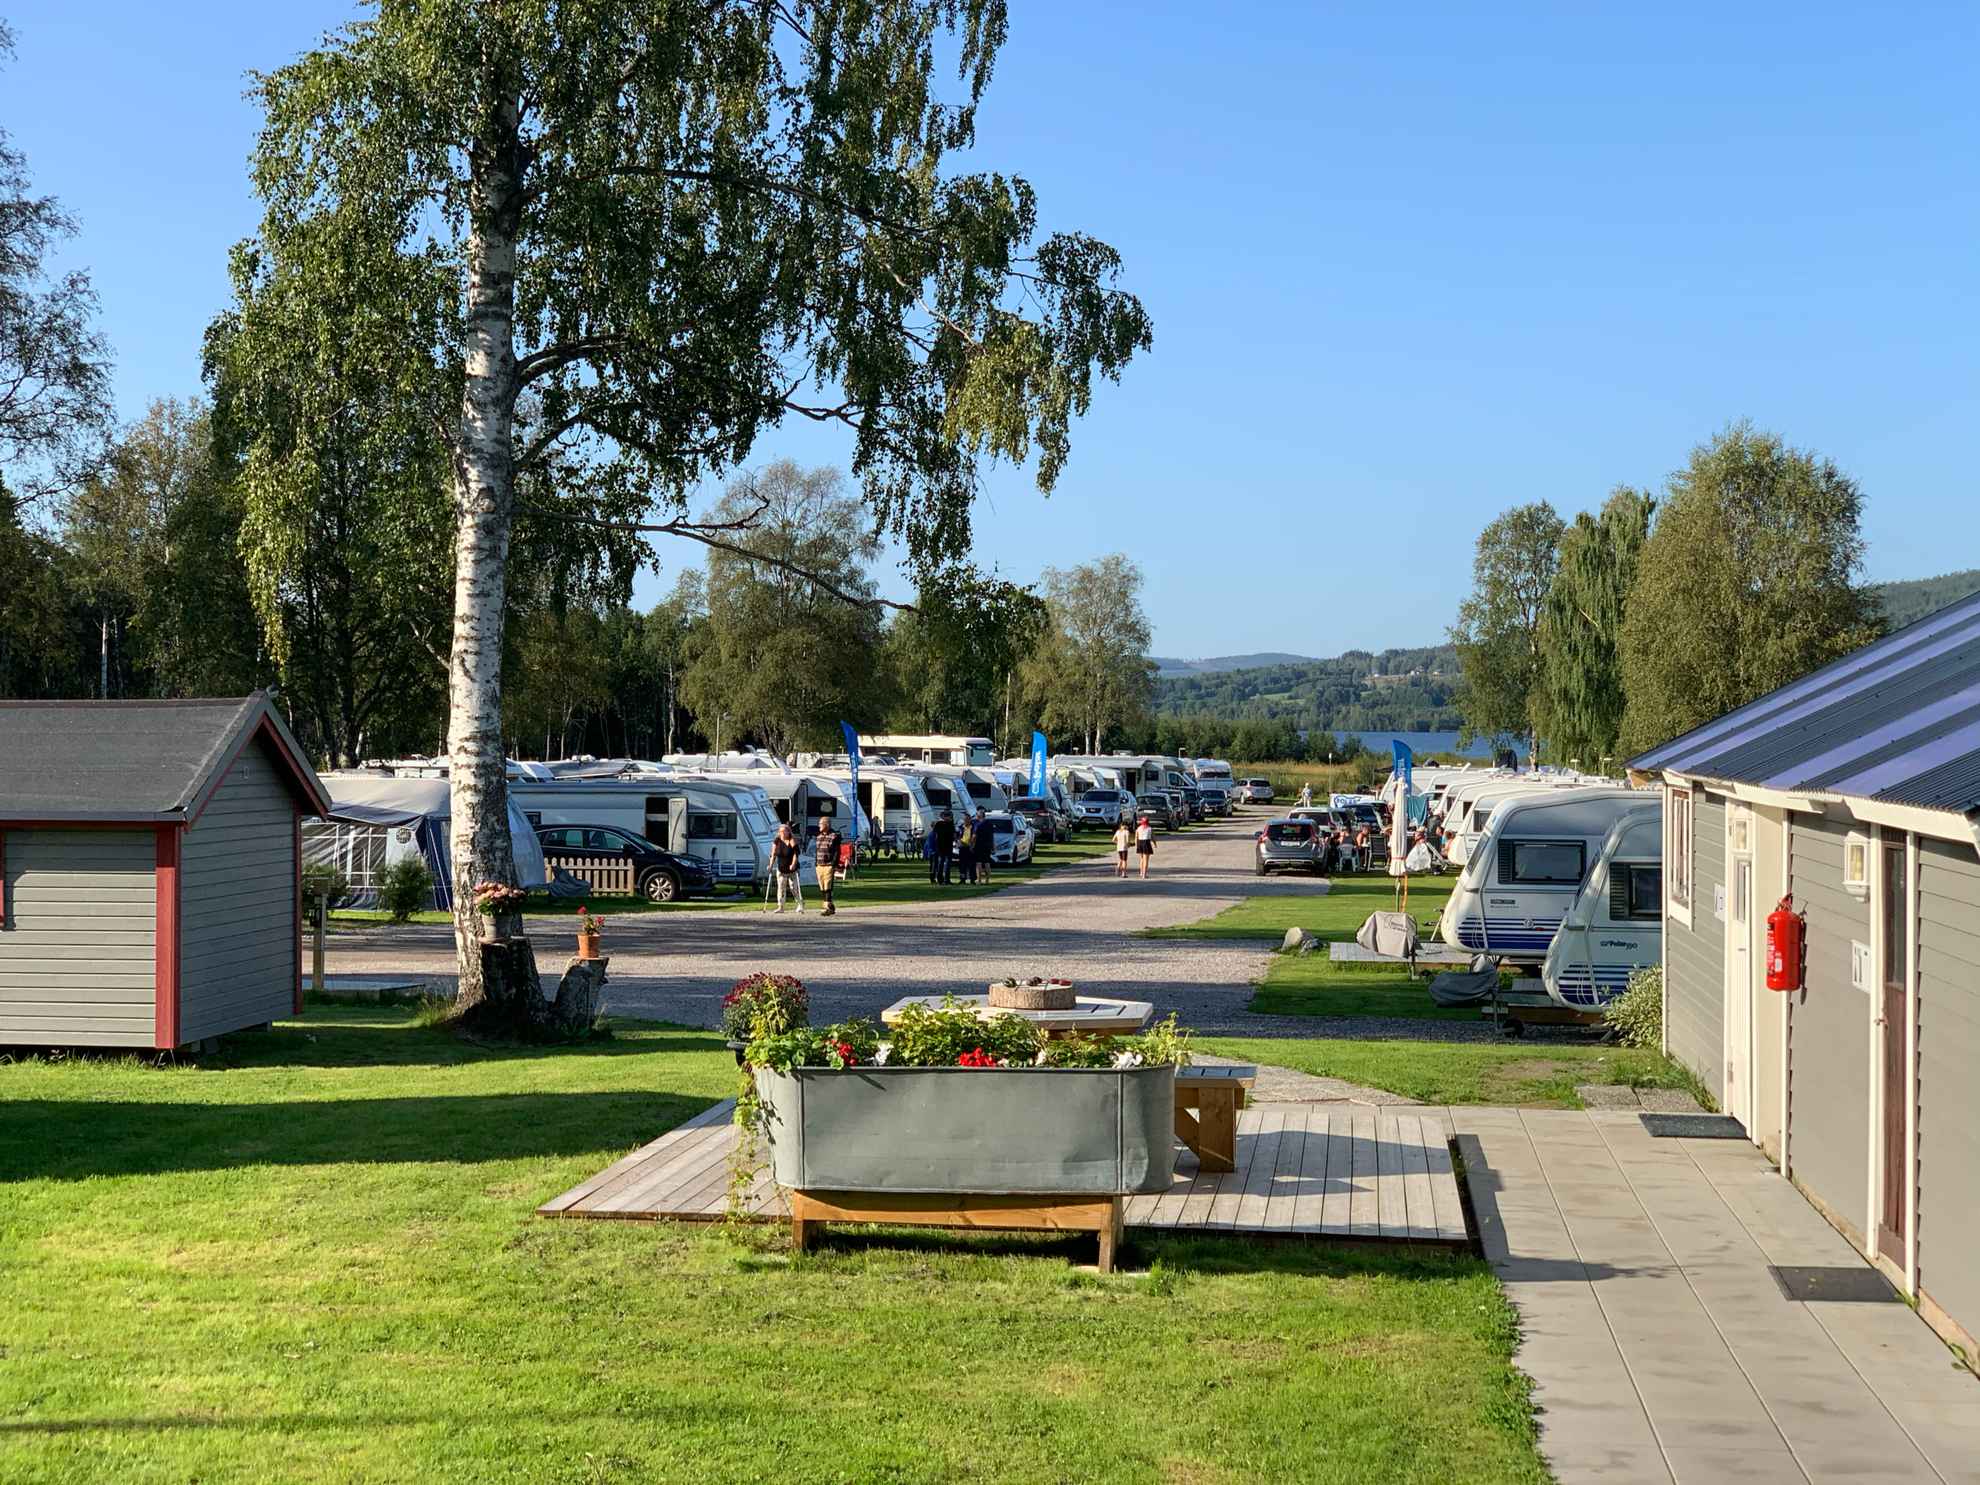 Caravanes garées en rang au camping d'Överhörnäs